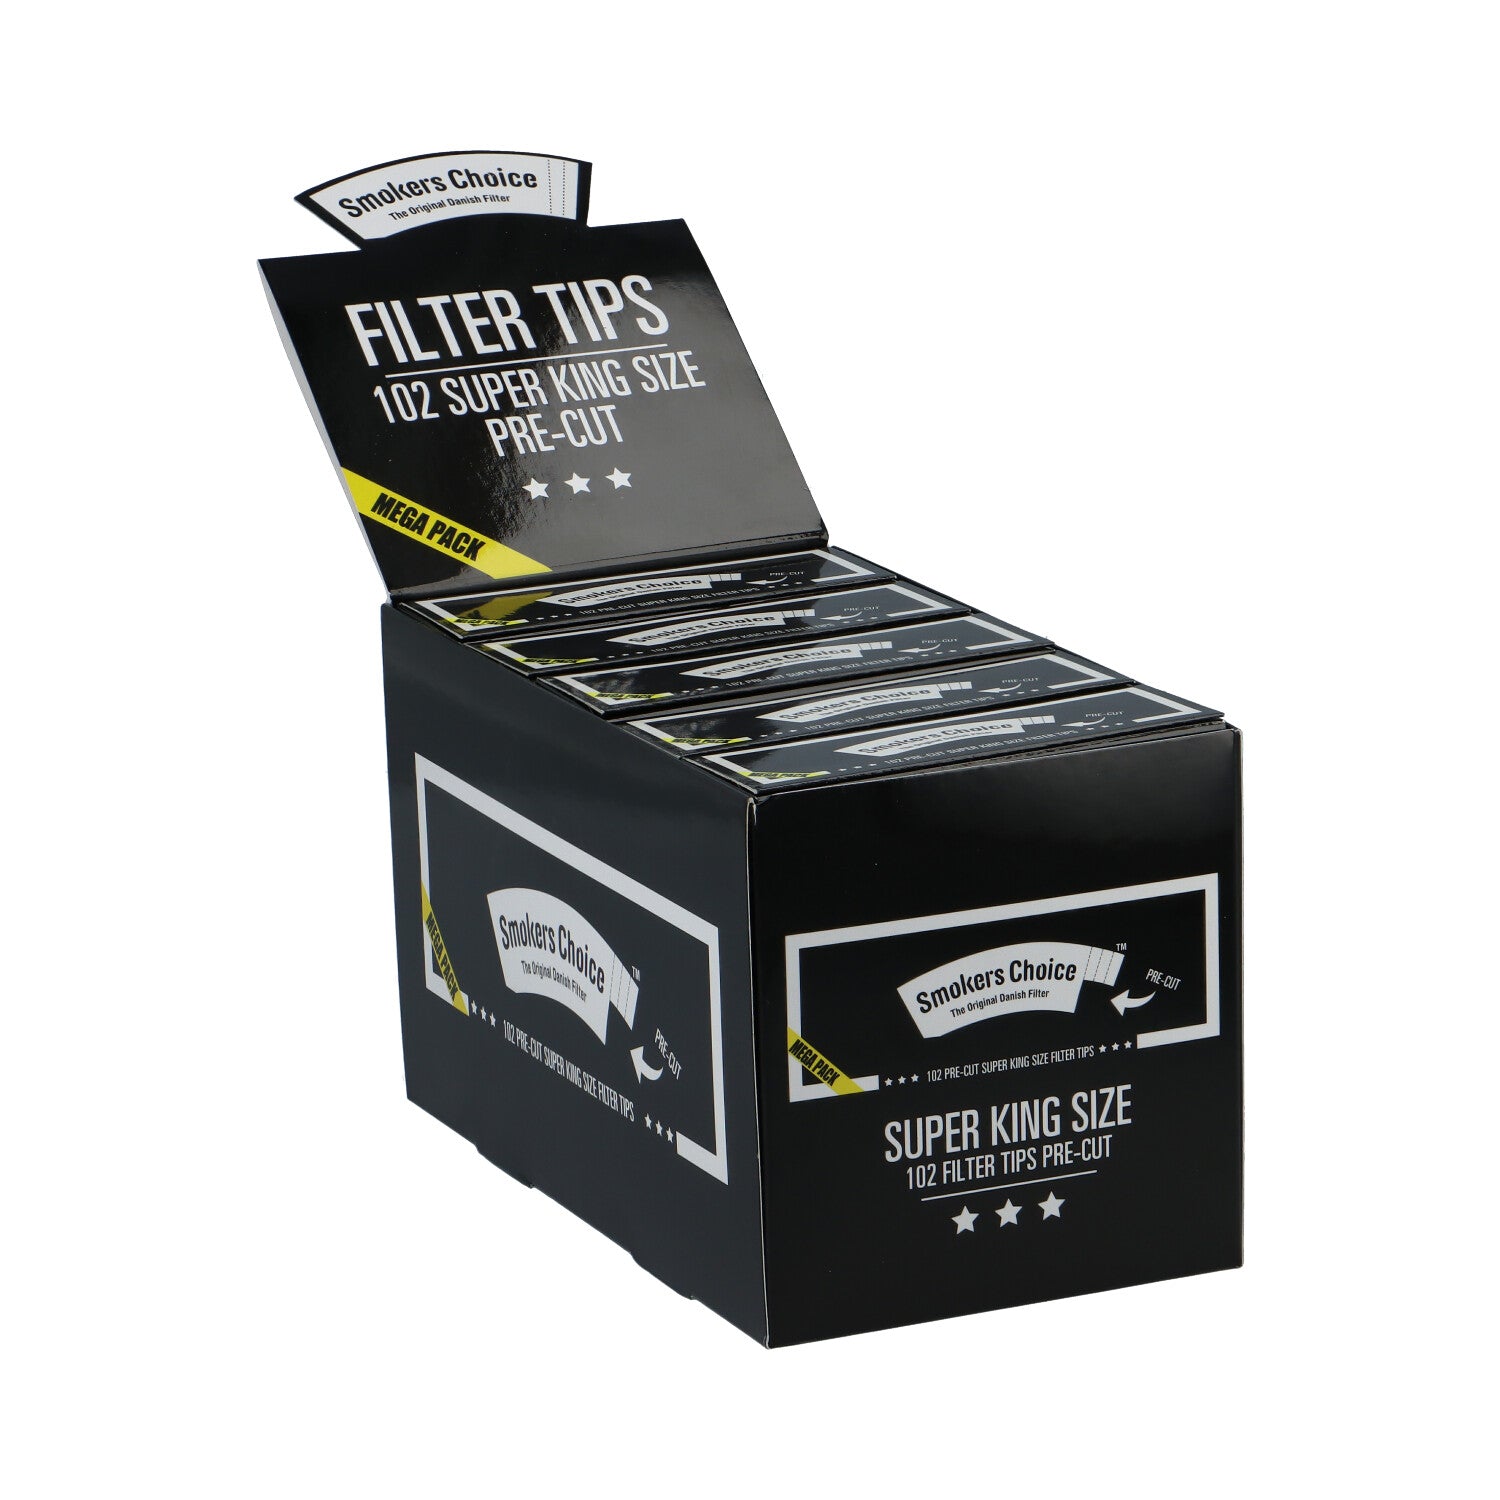 Smokers Choice Filter Tips Black Pre-Cut Super King Size Mega Pack Box open